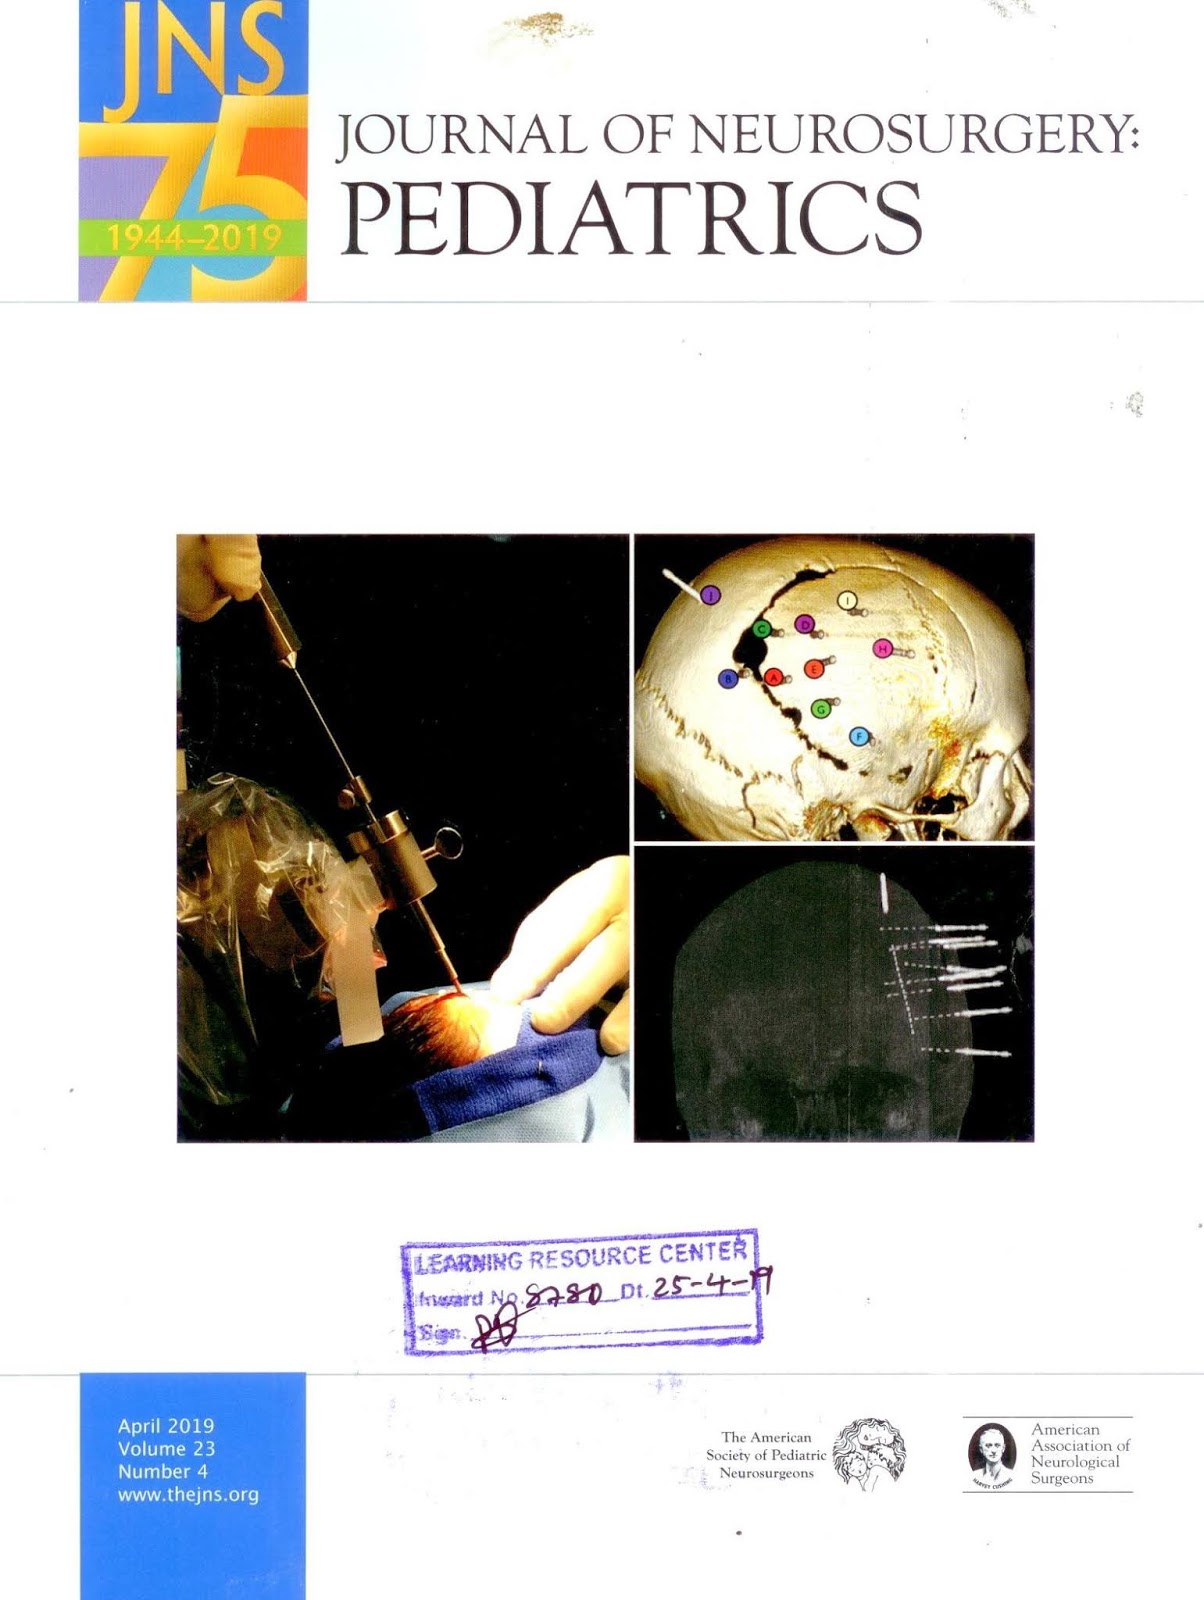 https://thejns.org/pediatrics/abstract/journals/j-neurosurg-pediatr/23/4/j-neurosurg-pediatr.23.issue-4.xml